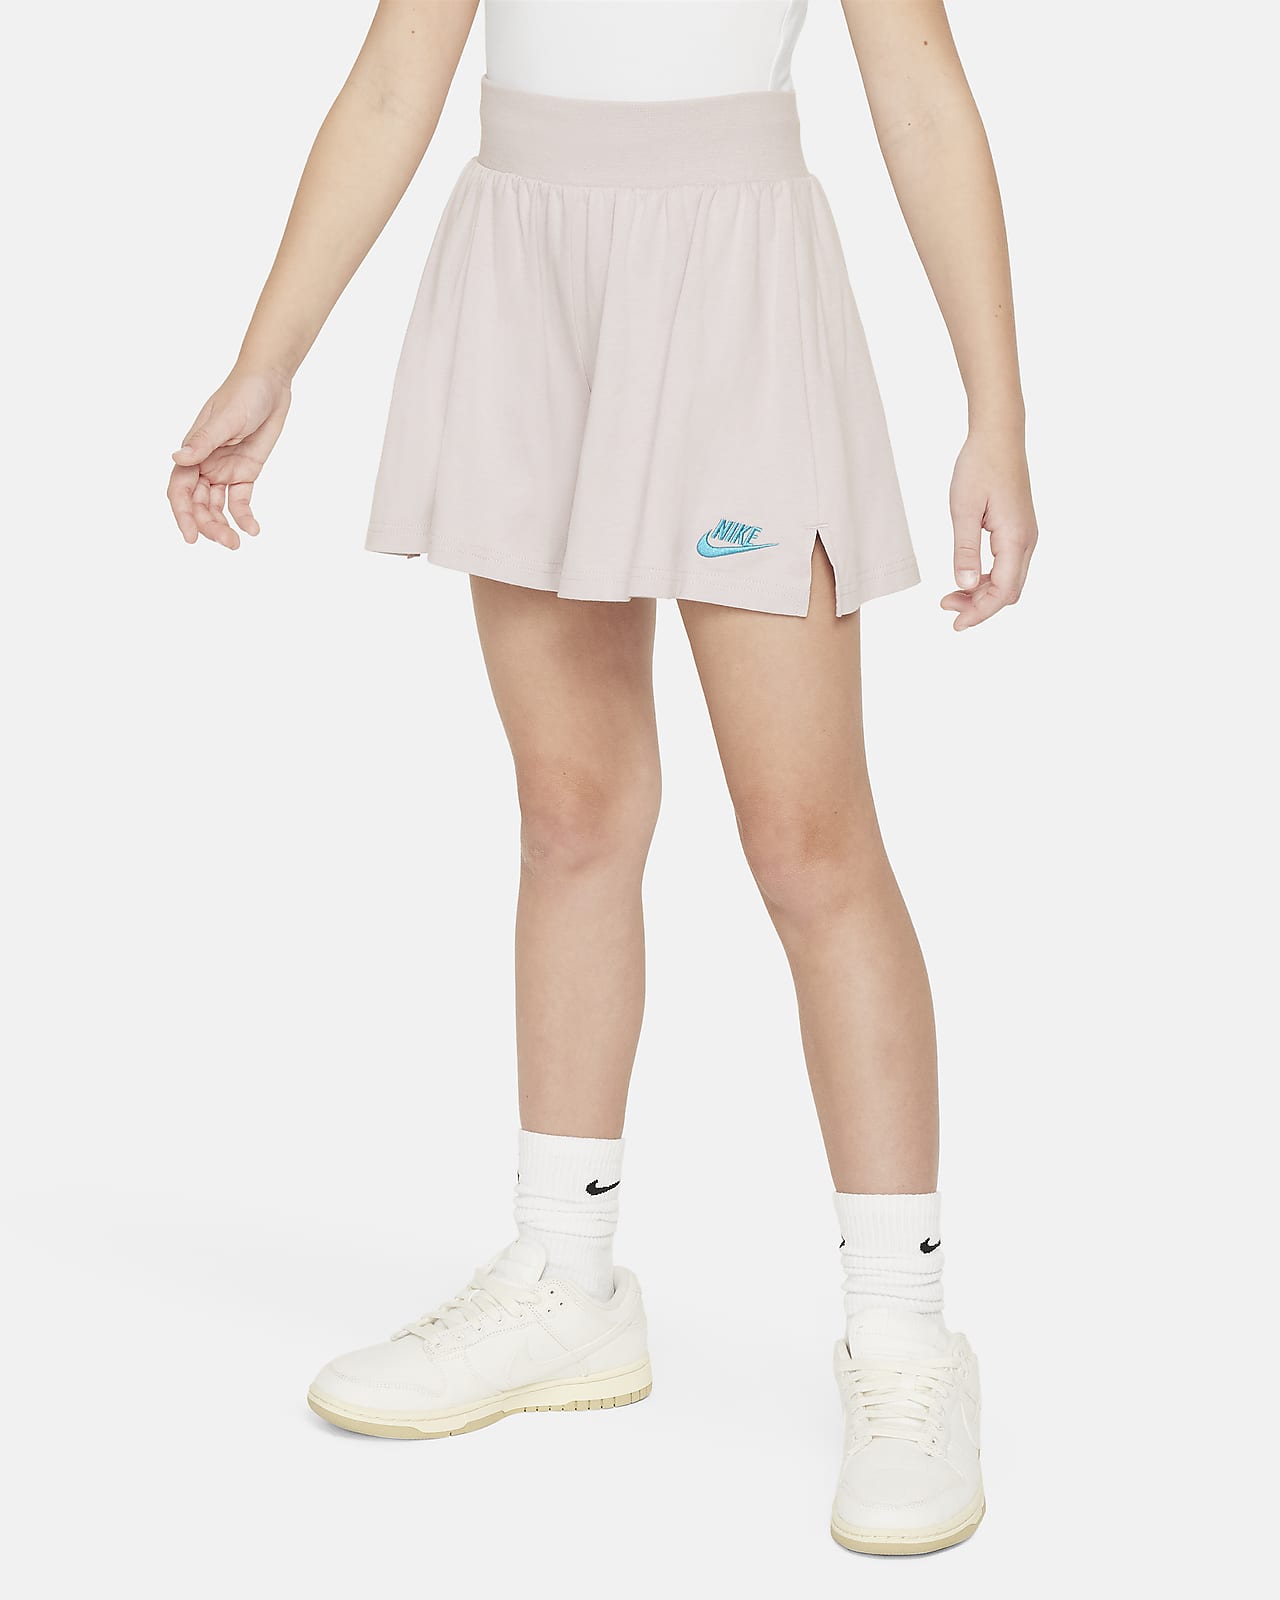 Calções Nike Sportswear Júnior (Rapariga)